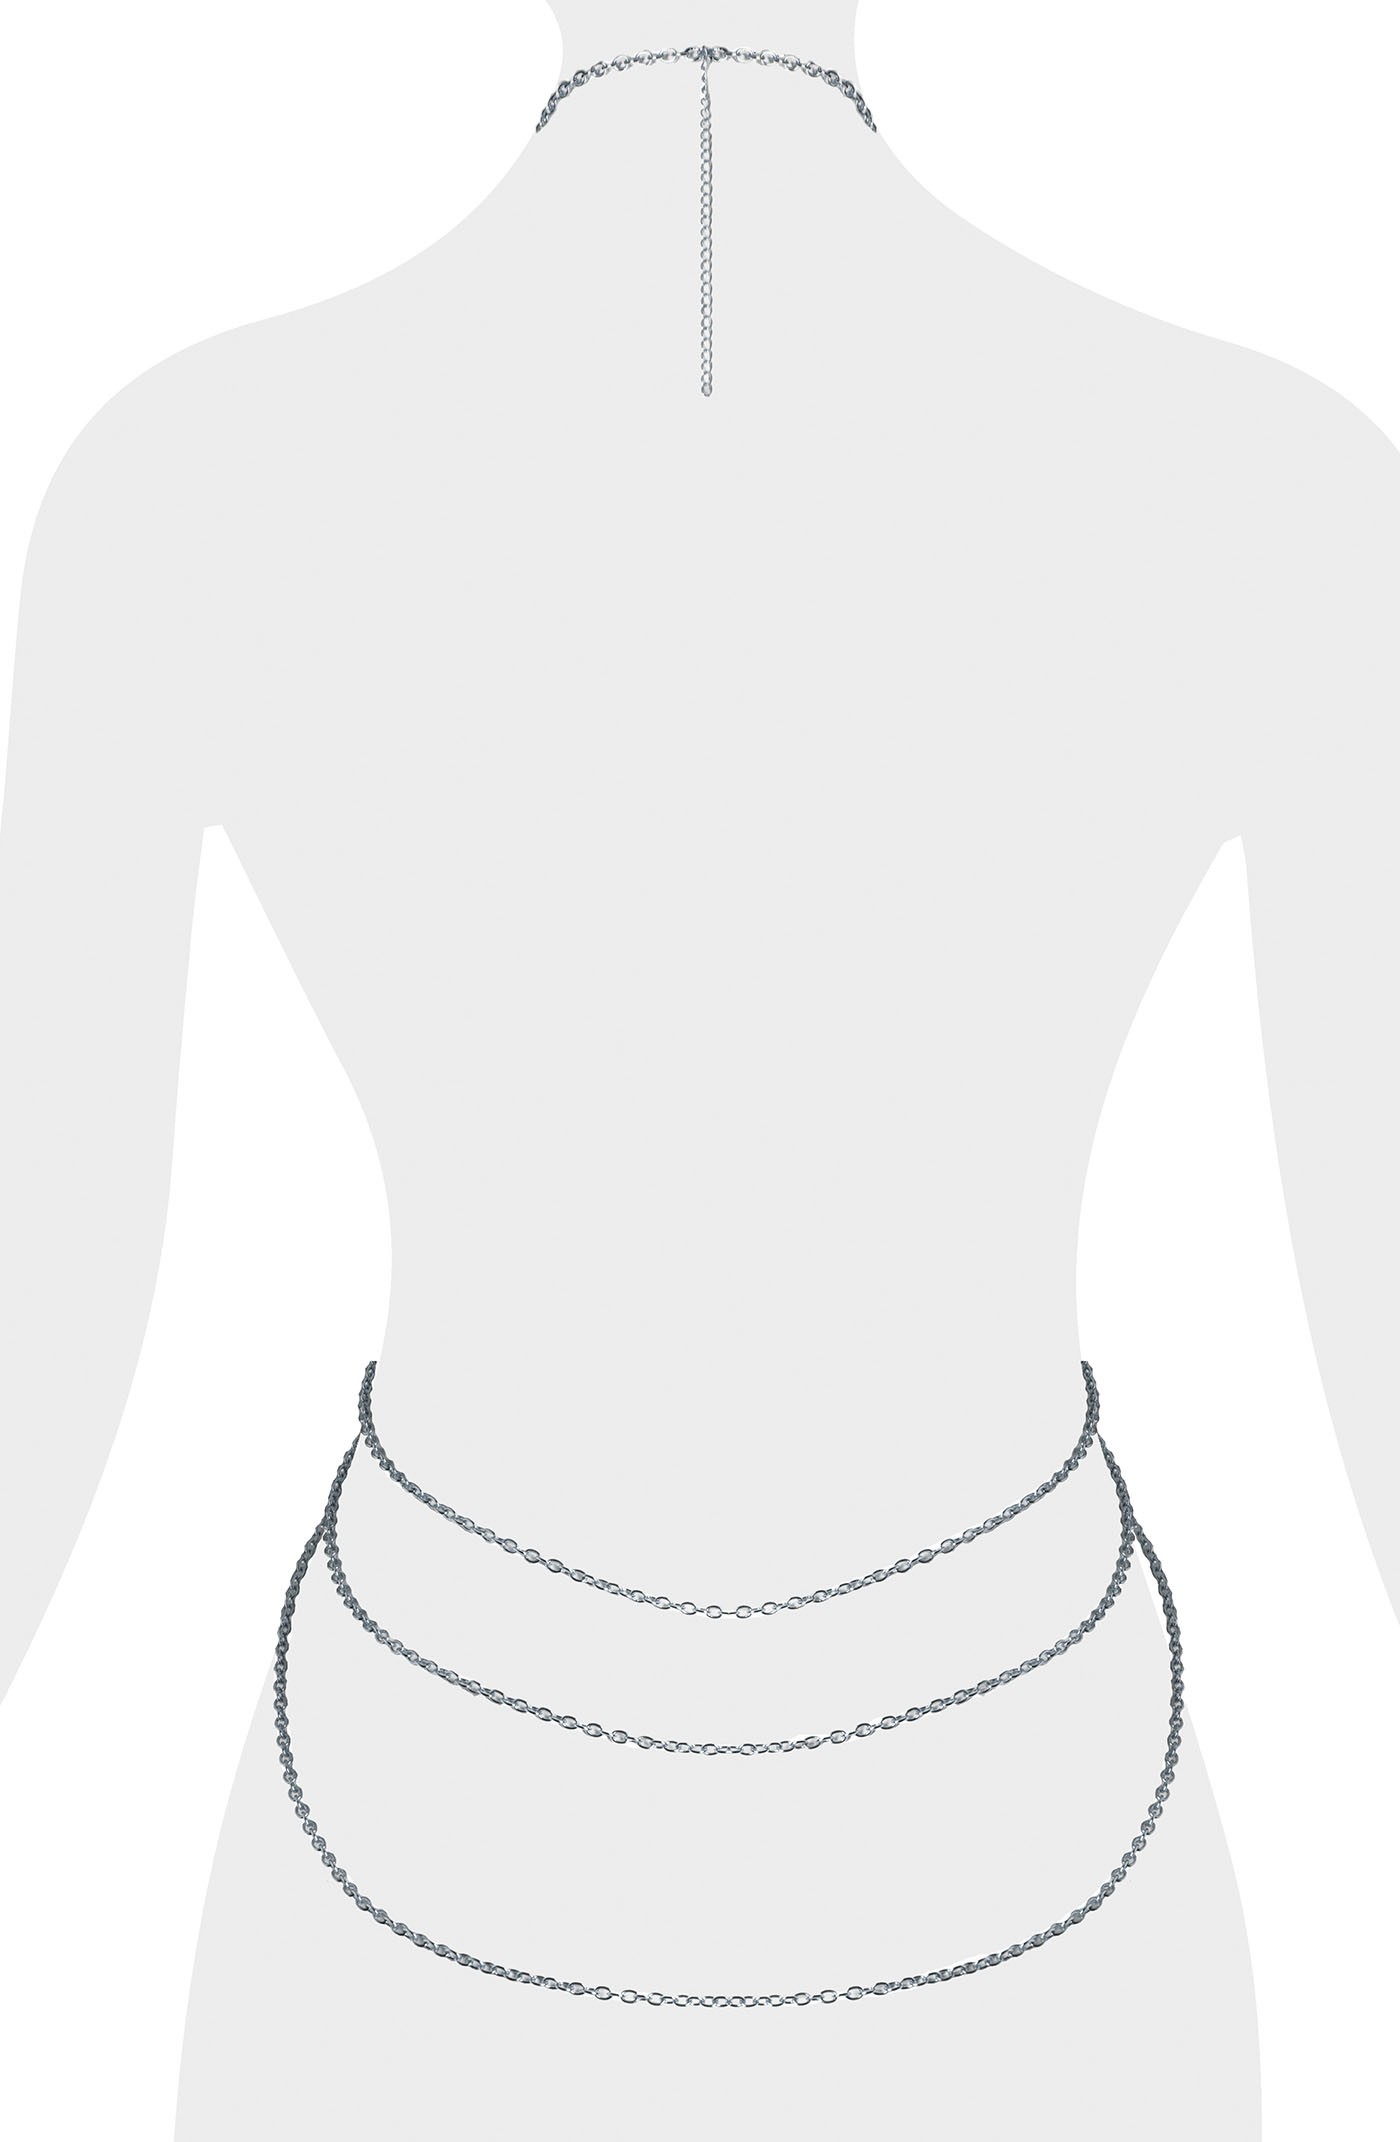 https://www.softparis.com/13058/emma-emsemble-top-skirt.jpg